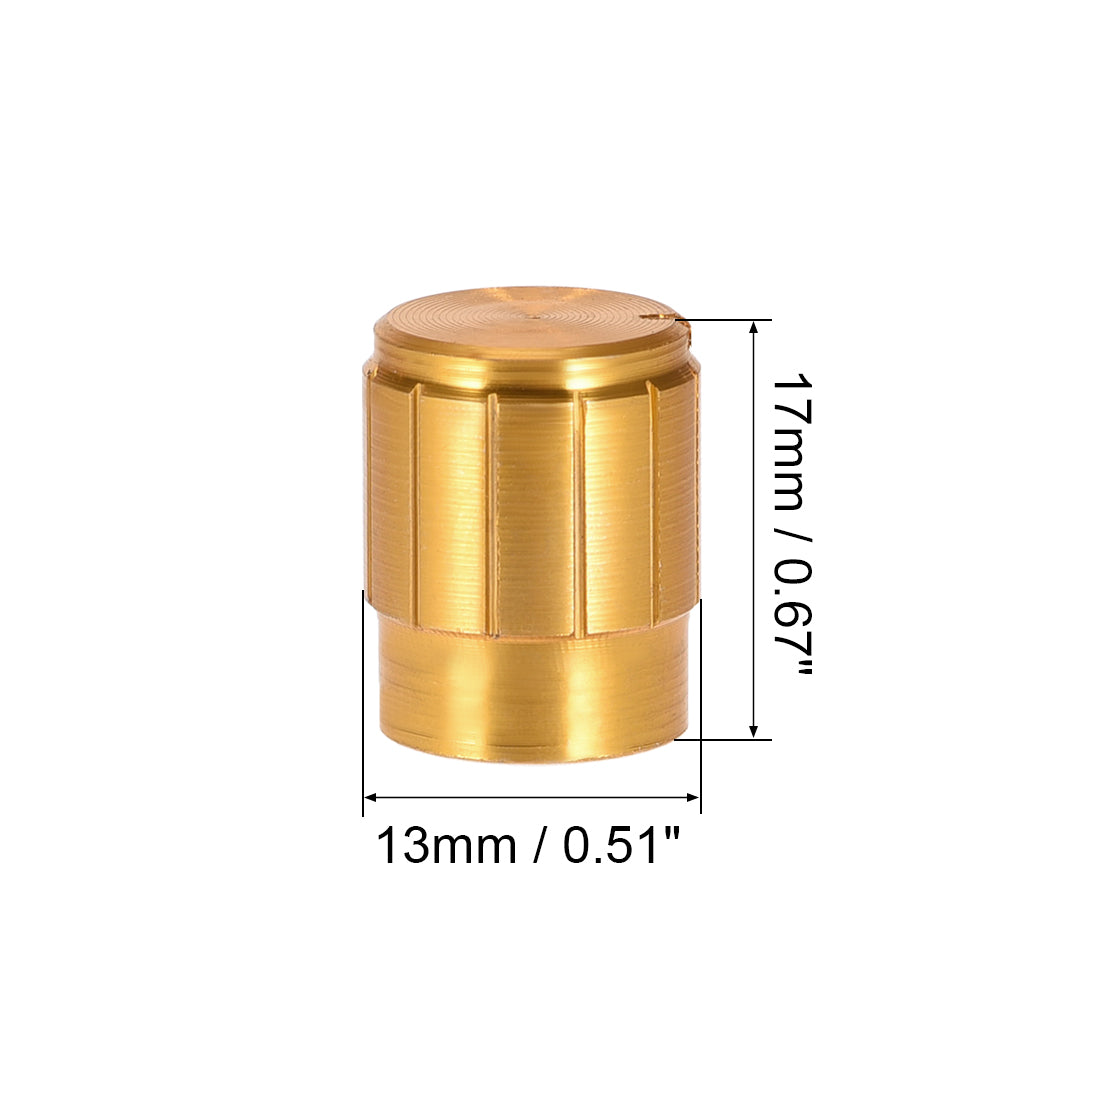 uxcell Uxcell 10pcs Potentiometer Knob Cover Cap Gold Tone Aluminum 6mm Shaft Dia. Rotary Knob 13mm Dia. x 17mm Height Volume Control Knob